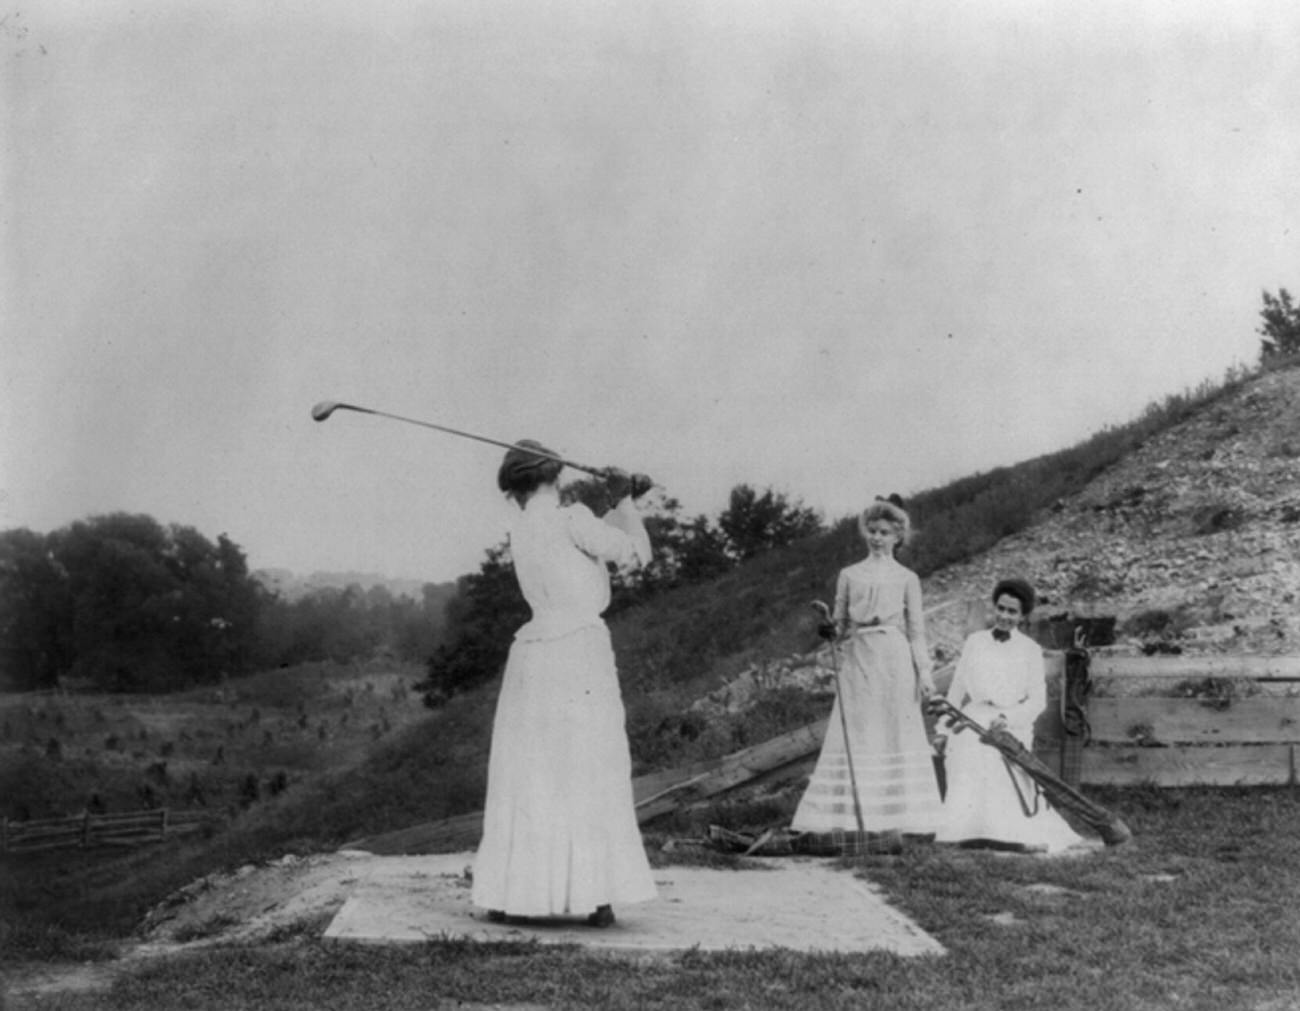 Three American women playing golf, 1900.